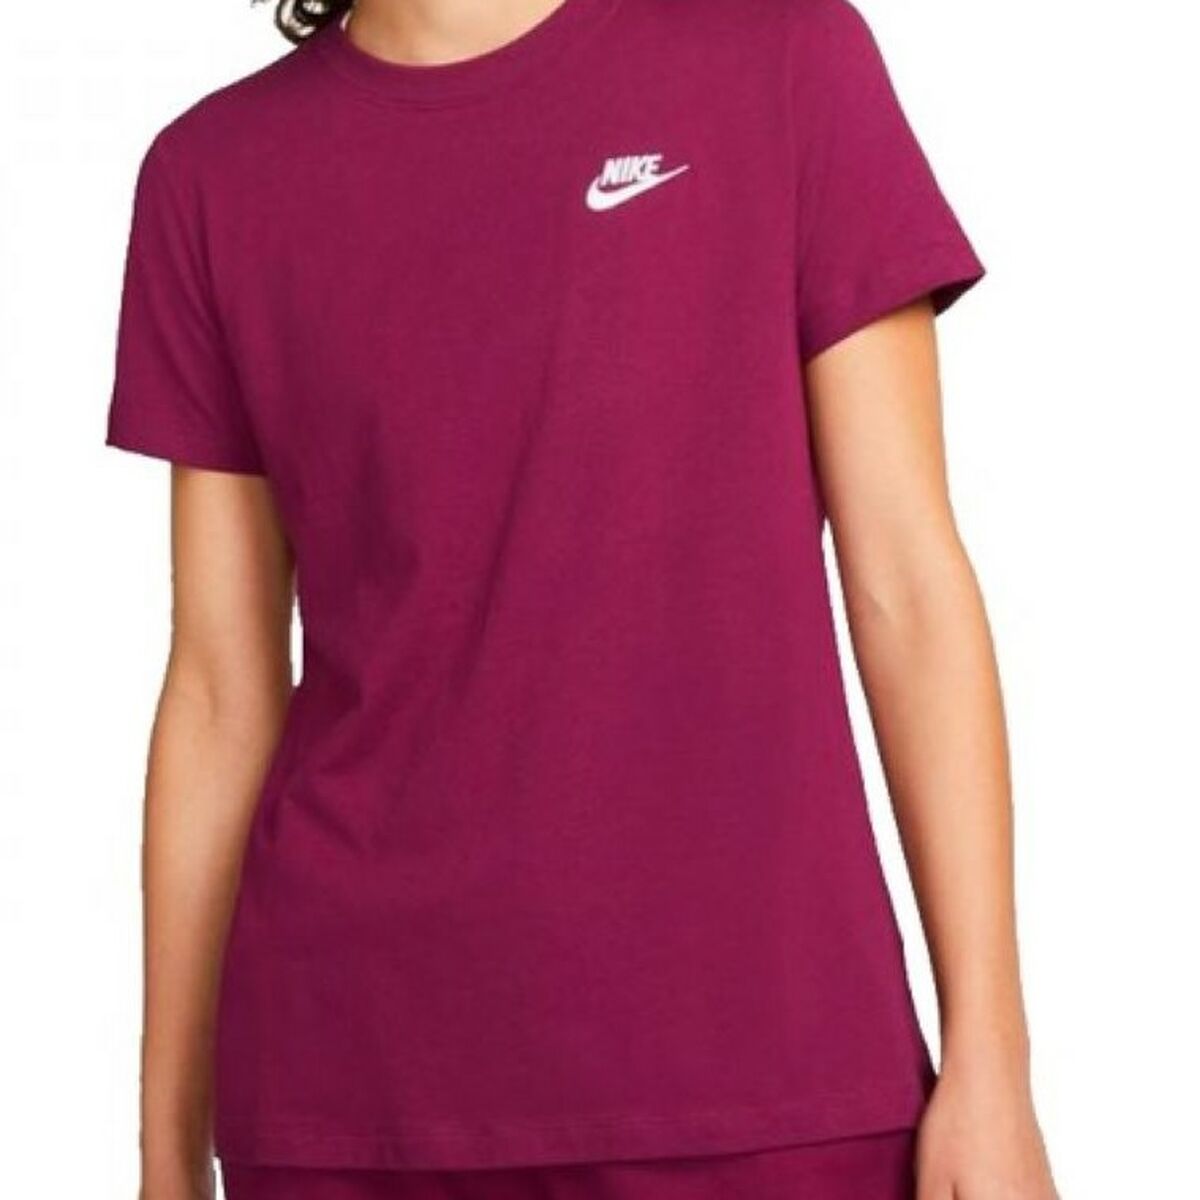 Damen Kurzarm-T-Shirt NSW CLUB TEE DN2393 Nike 610 in Rosa aus Baumwolle von Nike - XL